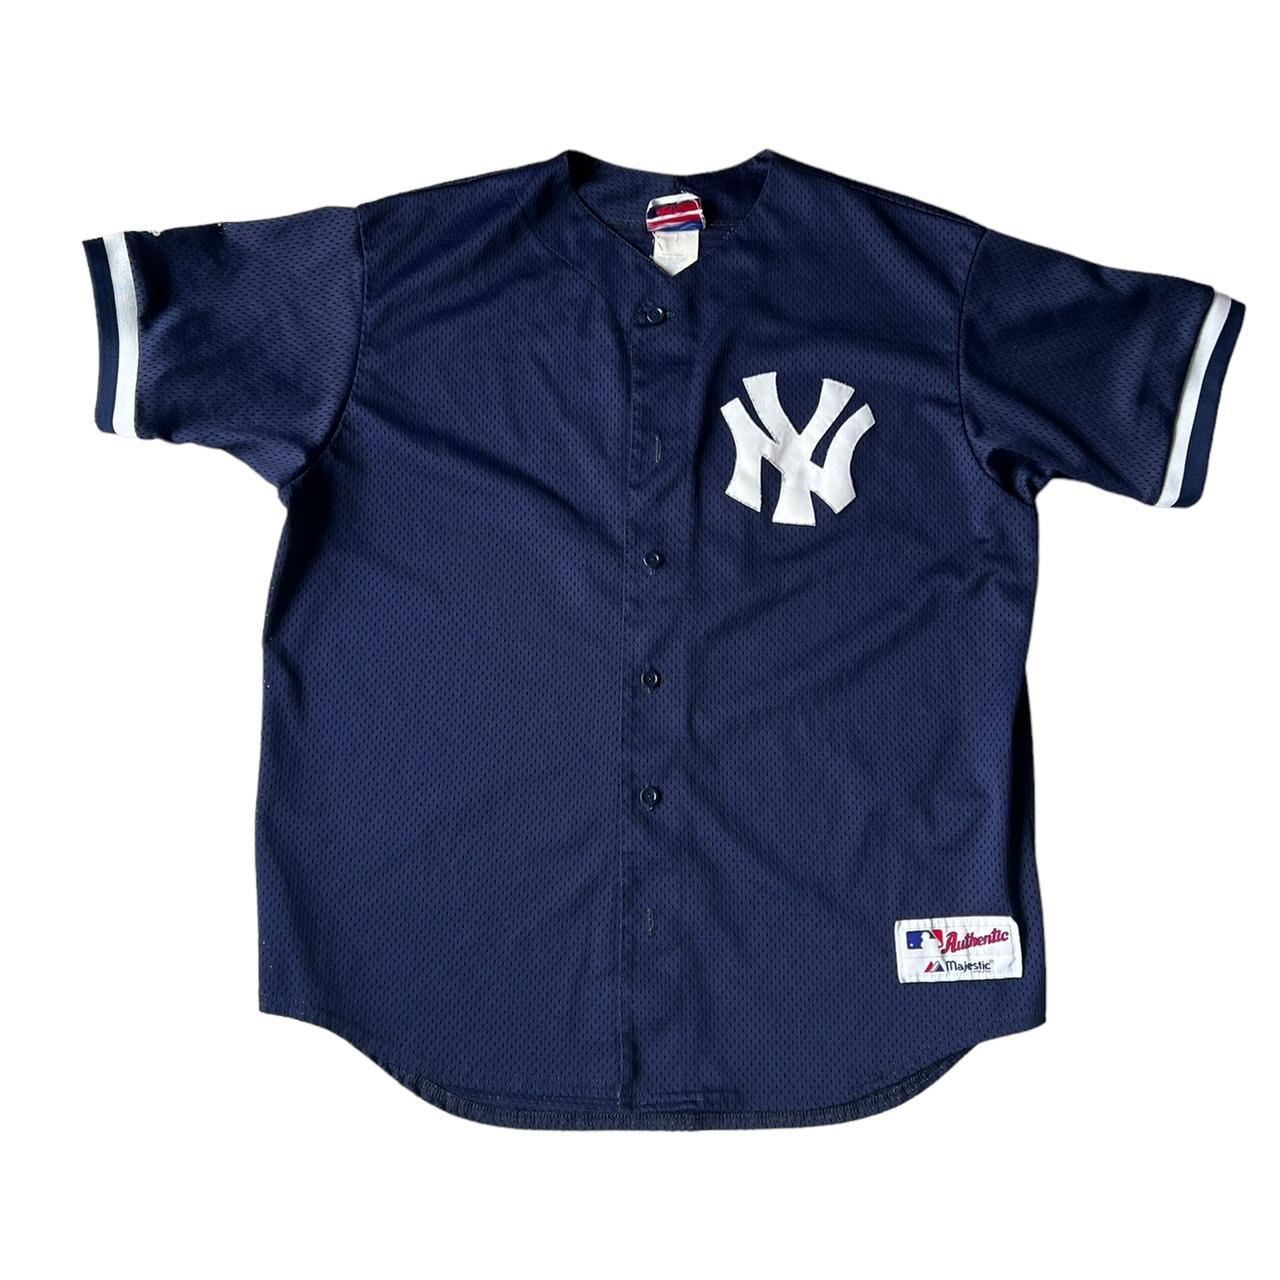 Vintage 1990's New York Yankees Derek Jeter Majestic Jersey Sz.XL